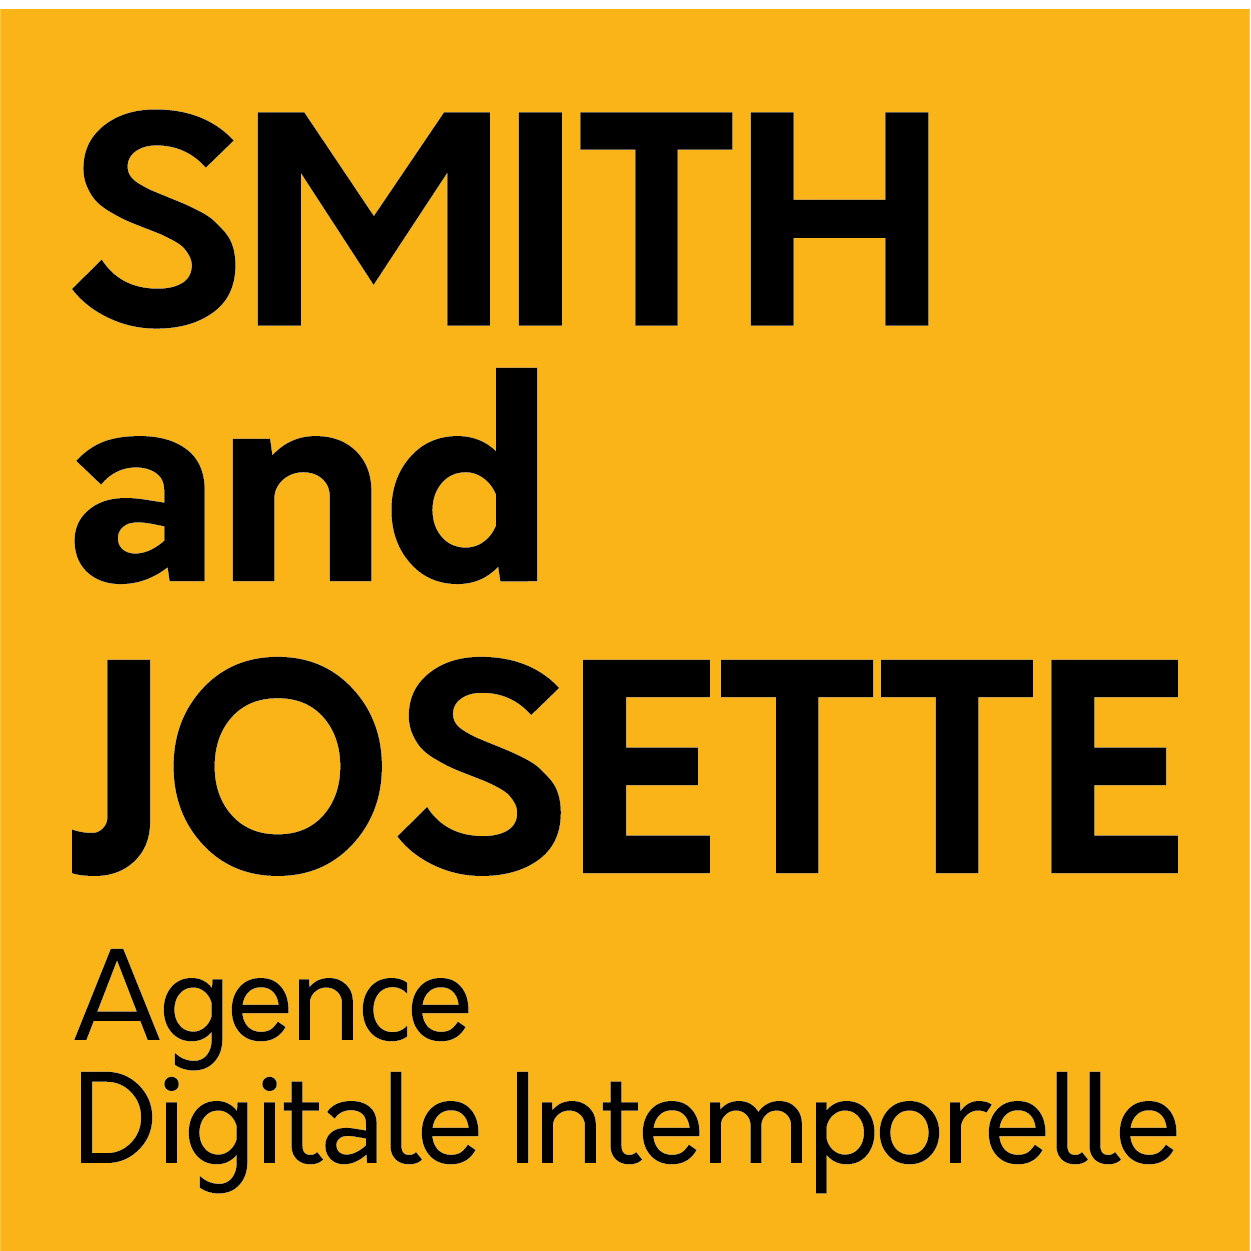 SMITH AND JOSETTE logo